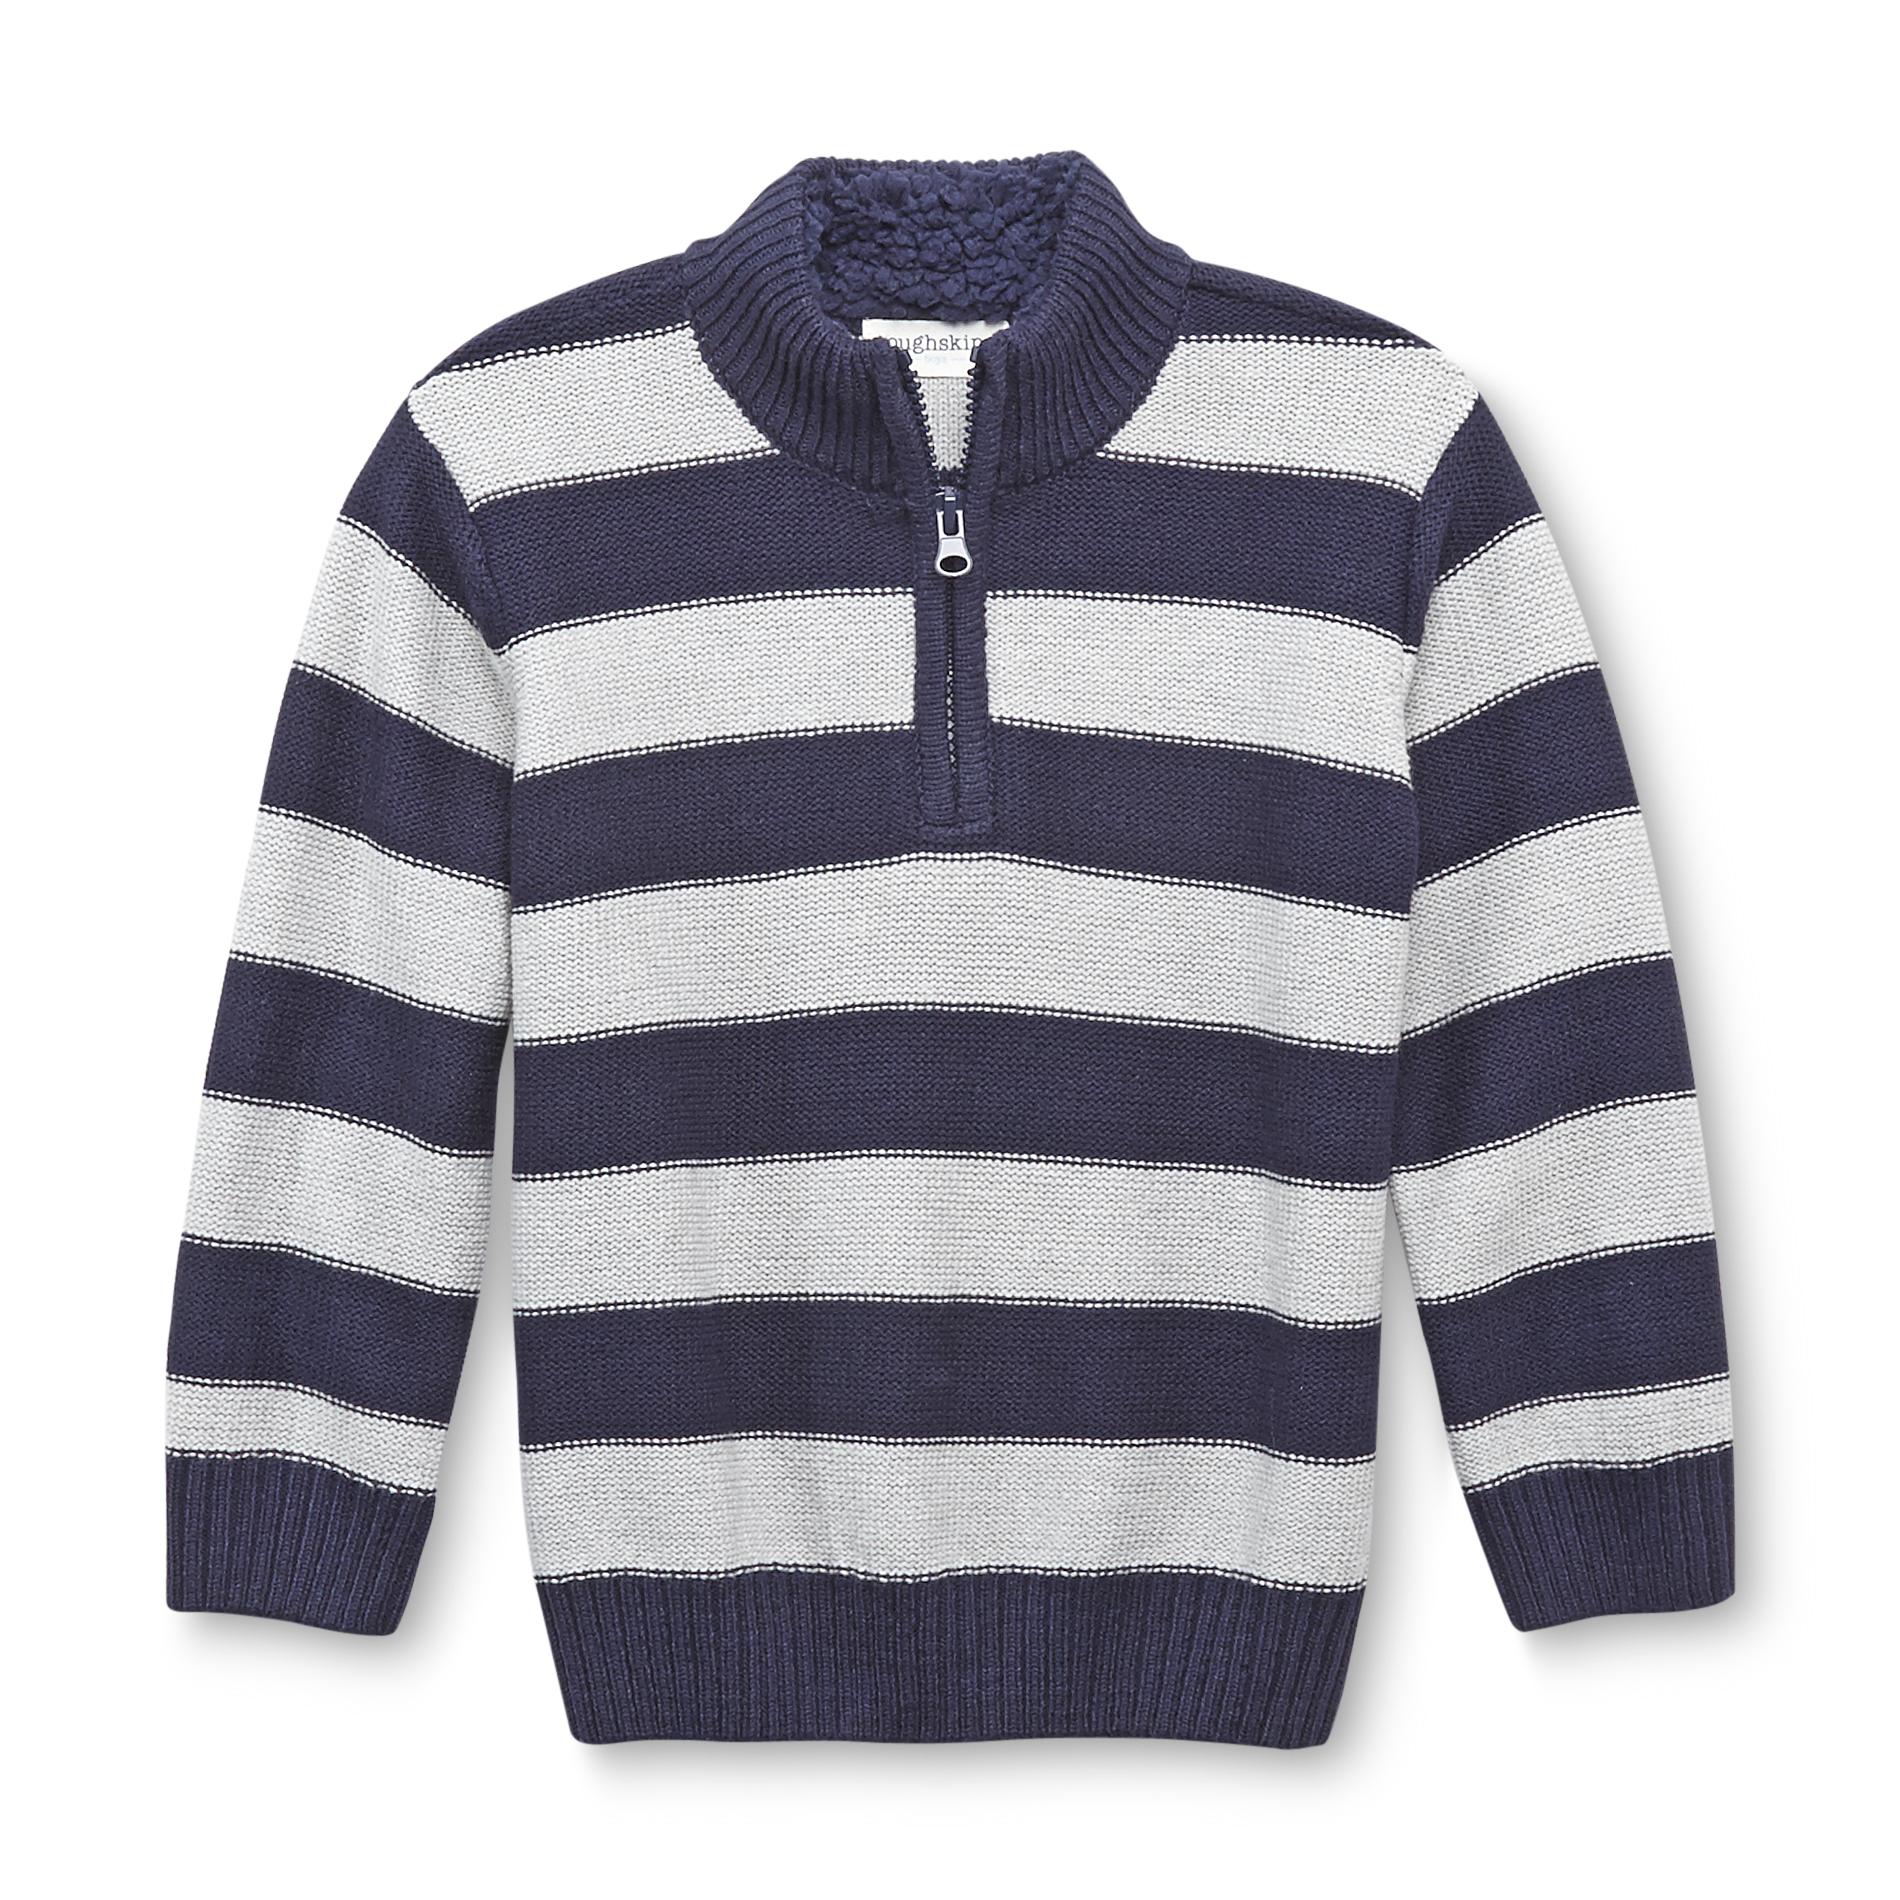 Toughskins Boy's Quarter-Zip Sweater - Striped